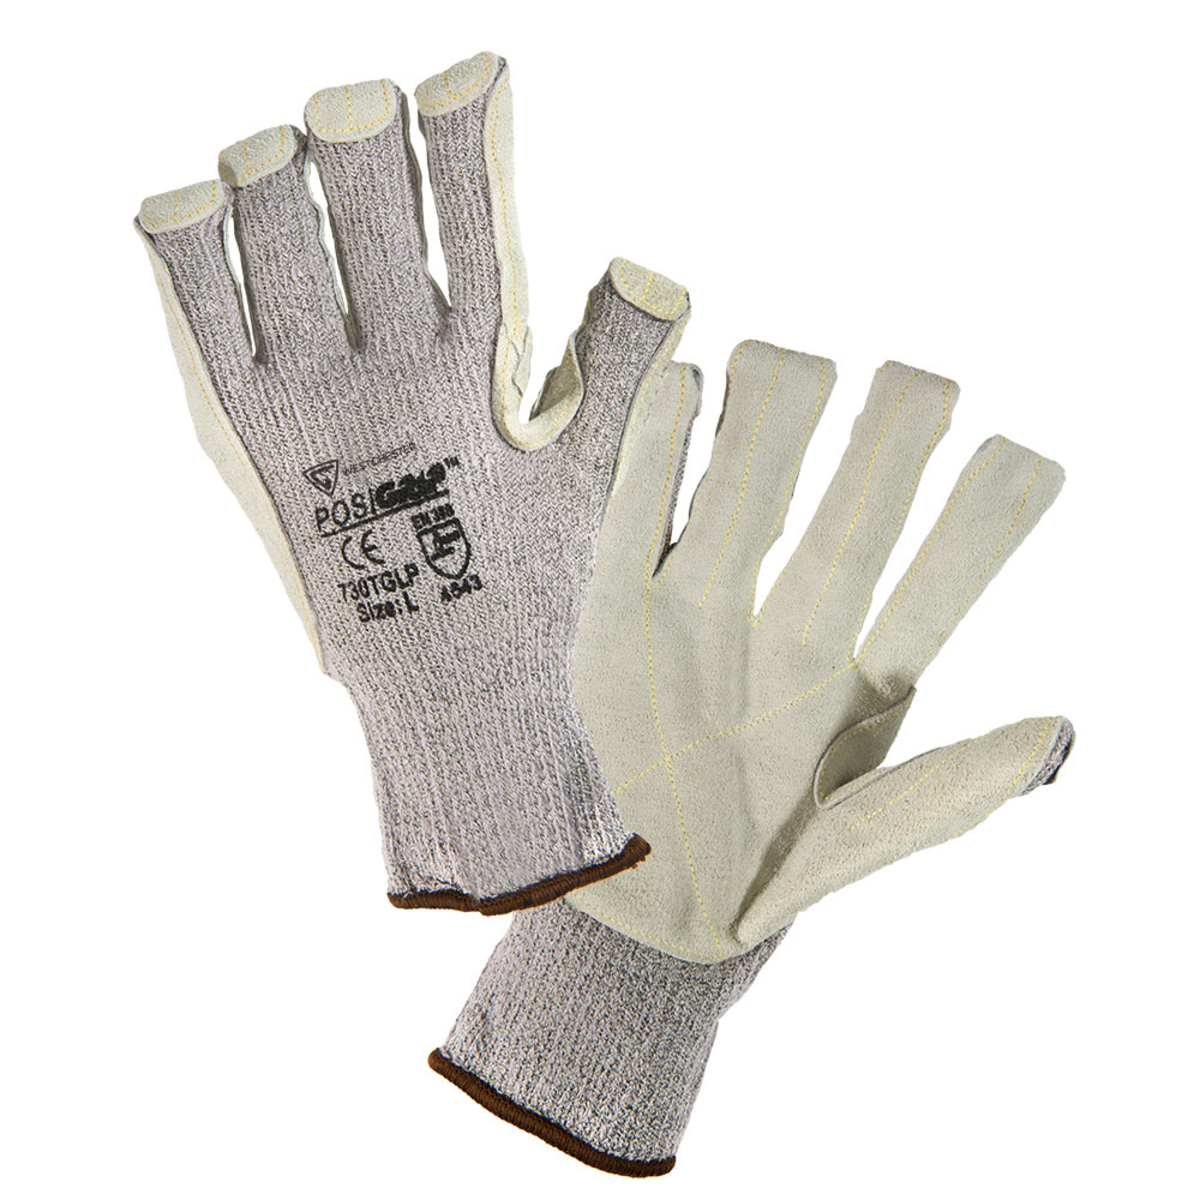 PIP® Medium PosiGrip® 13 Gauge High Performance Polyethylene Cut Resistant Gloves